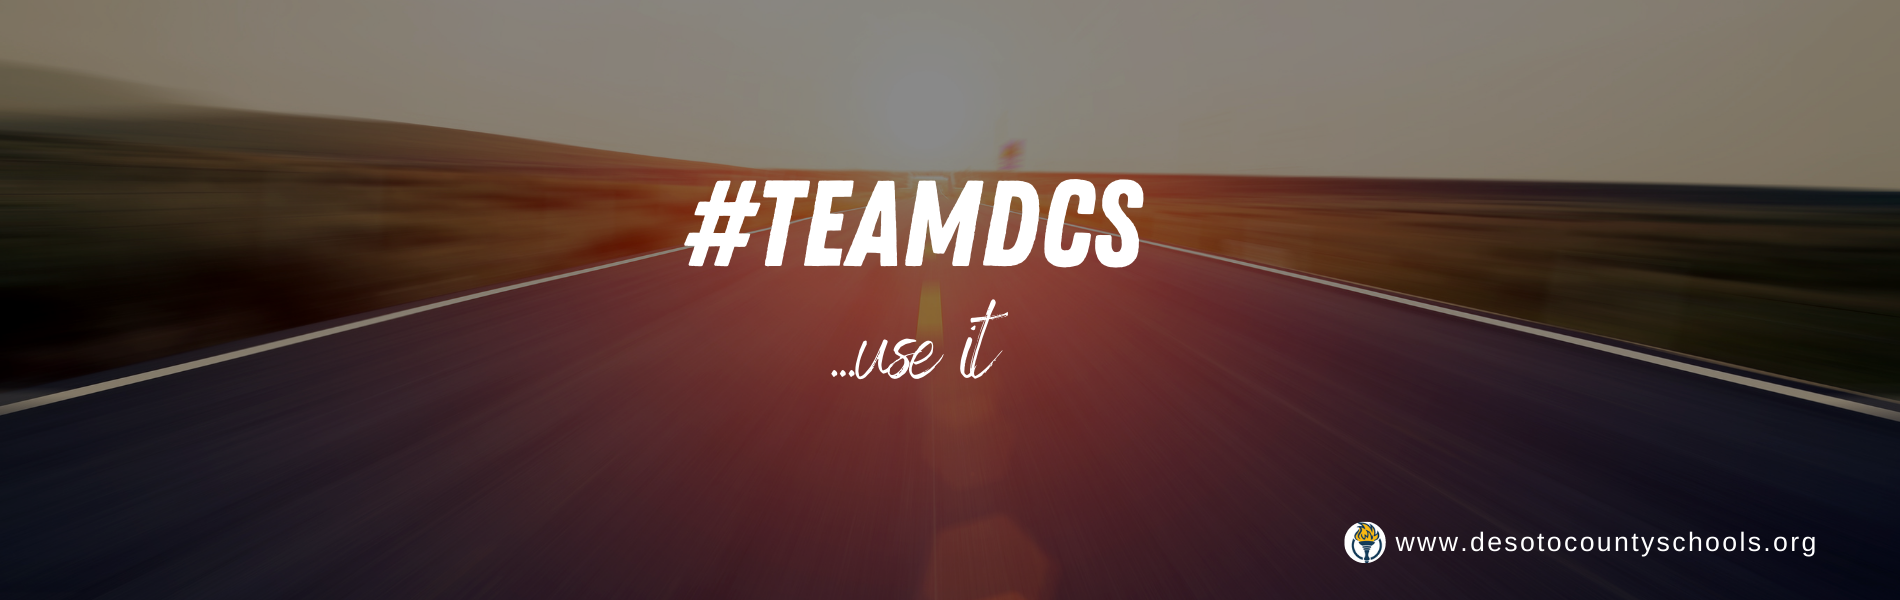 DCS Twitter Hashtag #TEAMDCS Use it